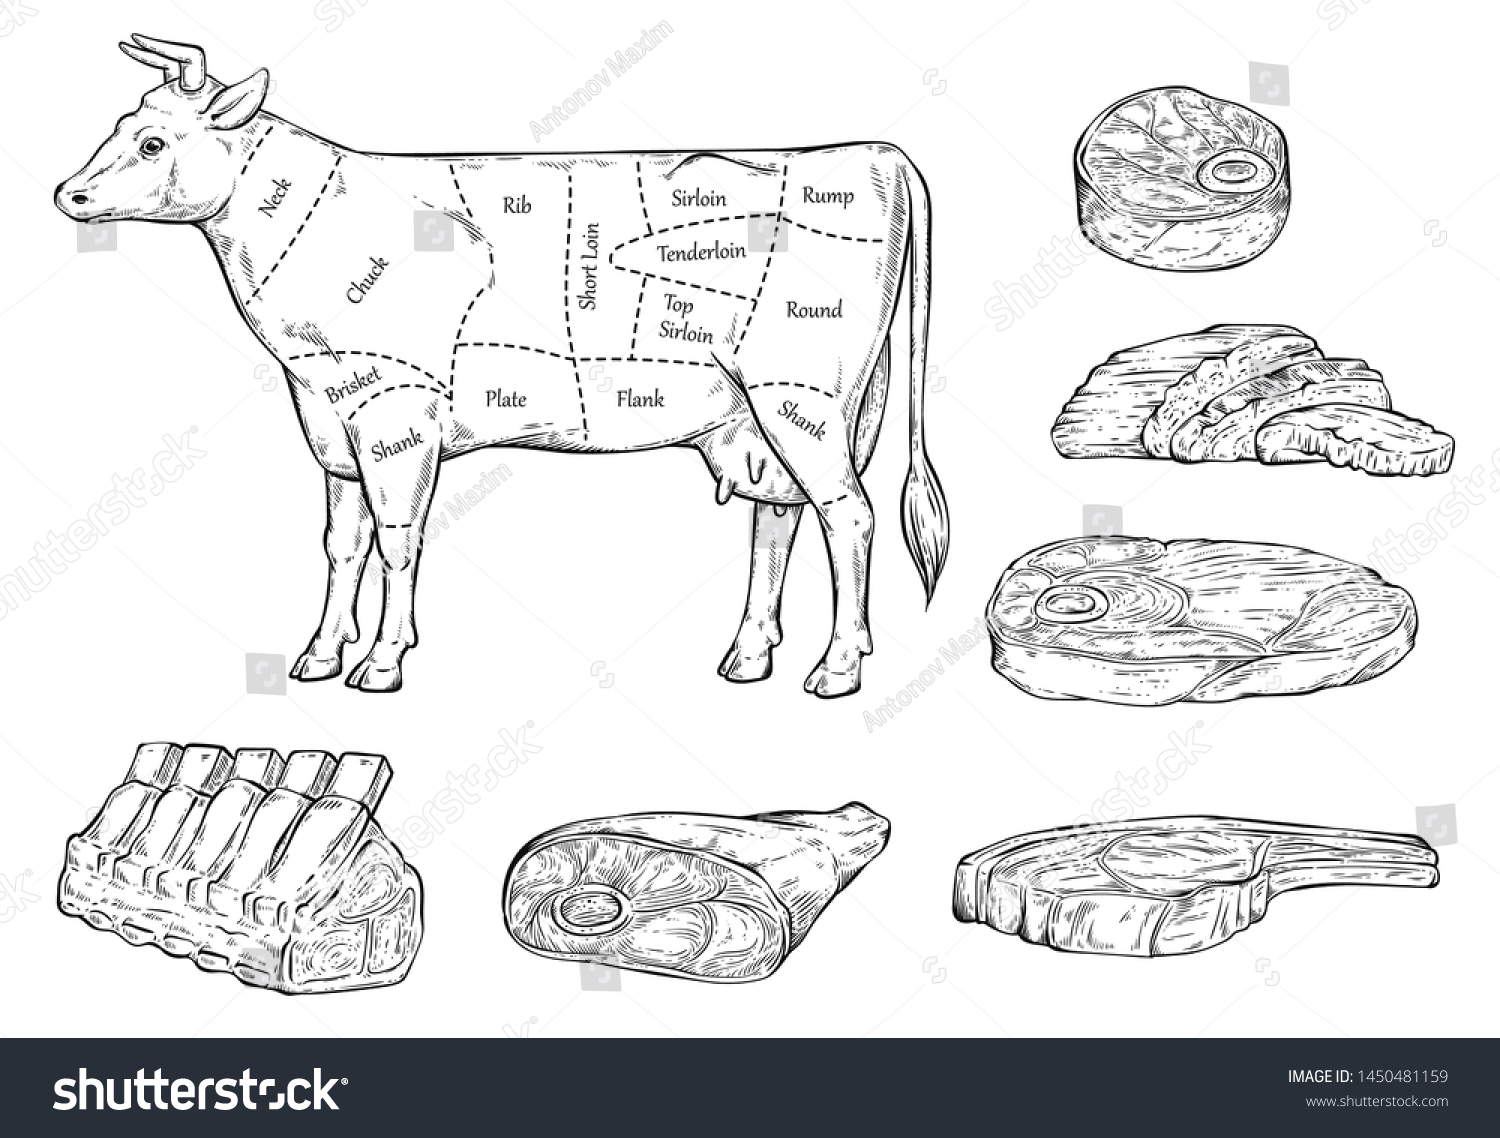 Схема нарезки говядины